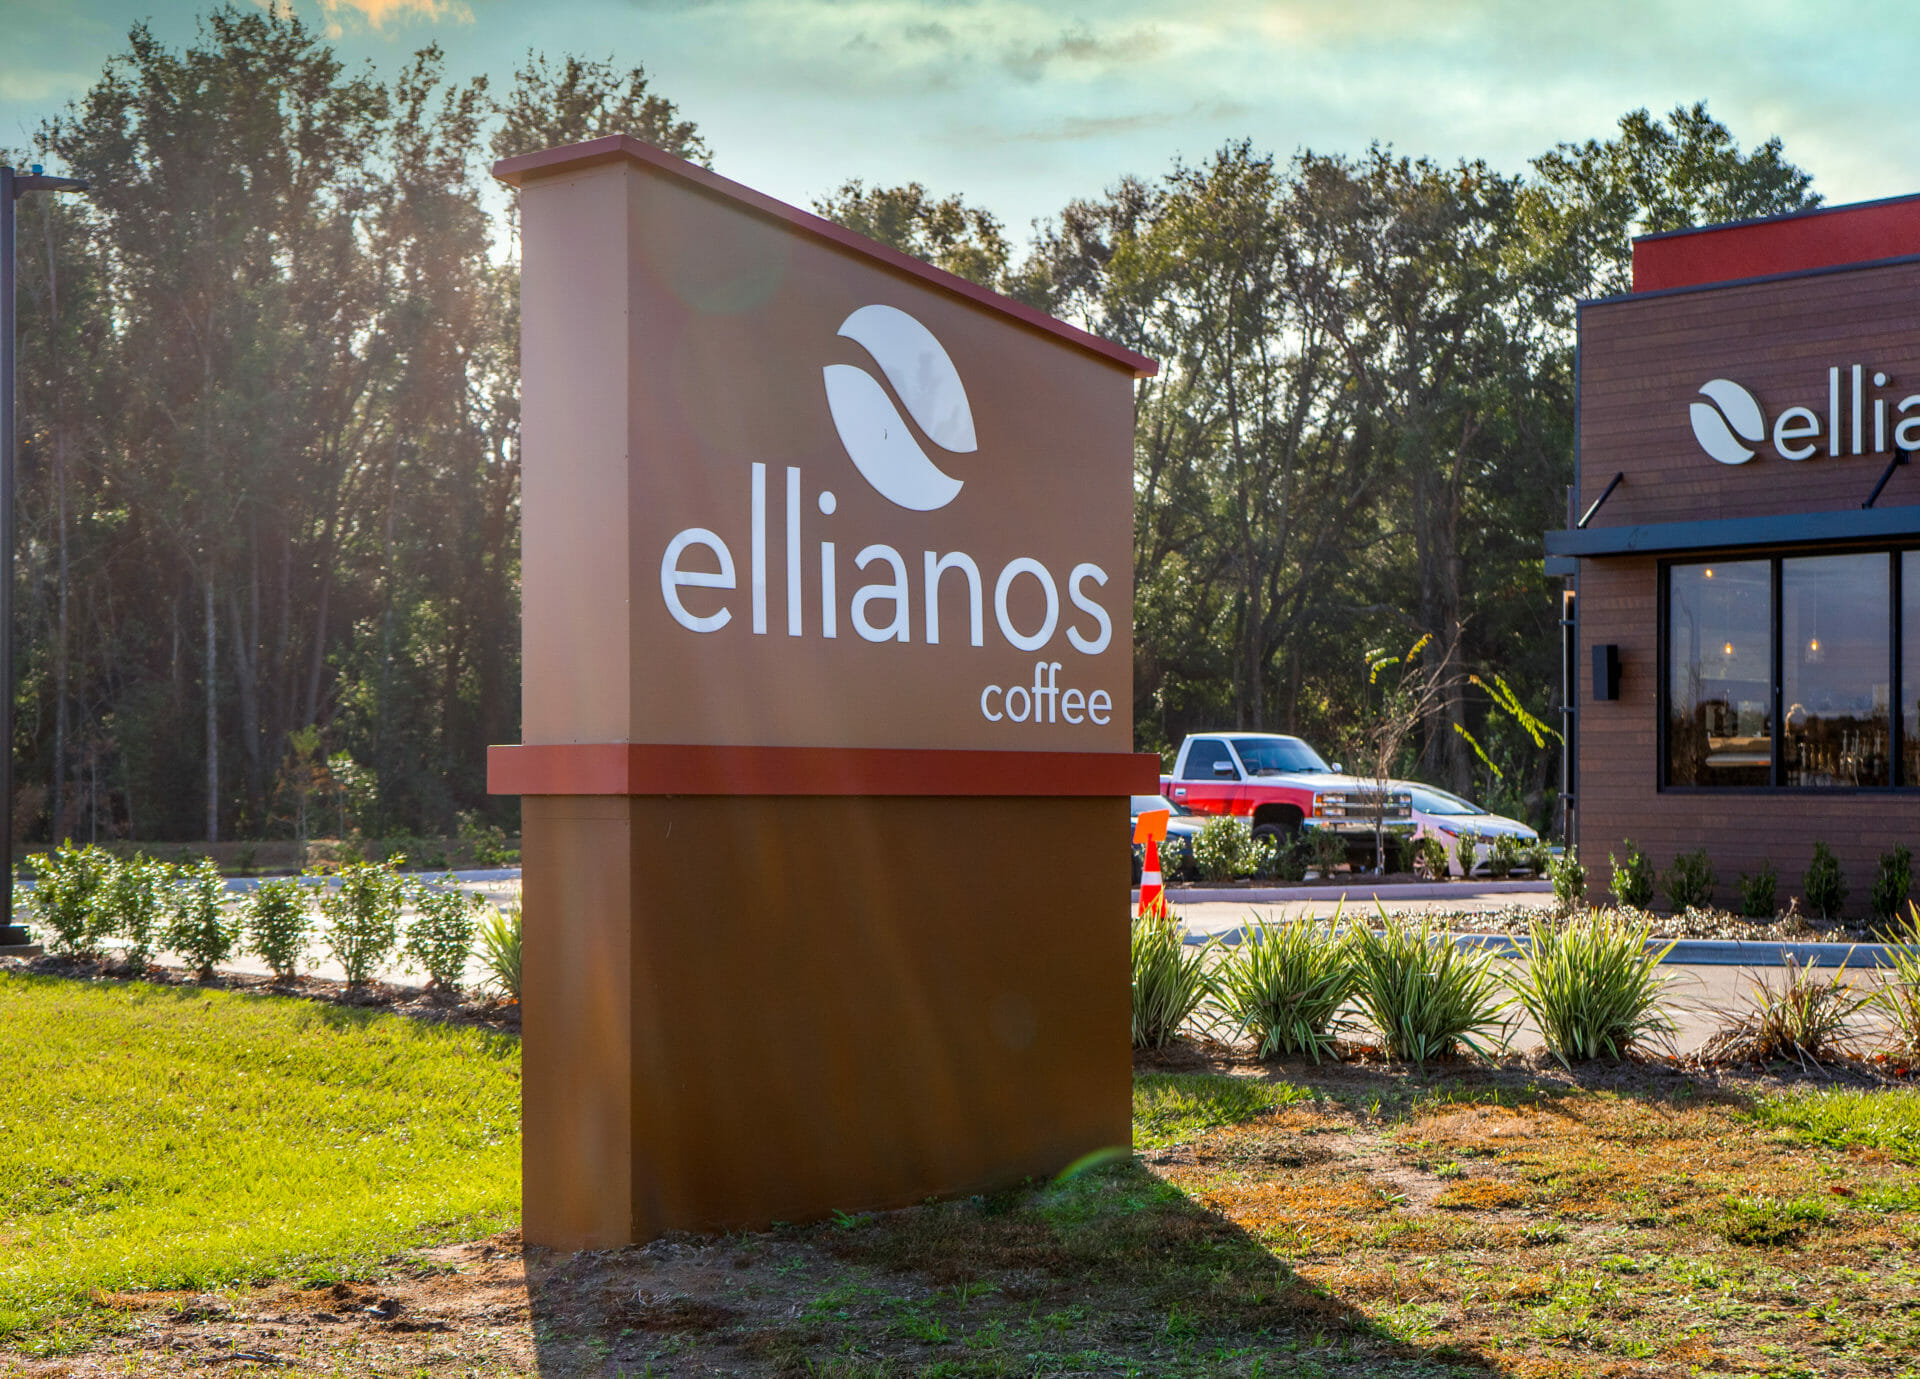 Ellianos Coffee Drive-Thru Franchise Expanding in Valdosta, Georgia